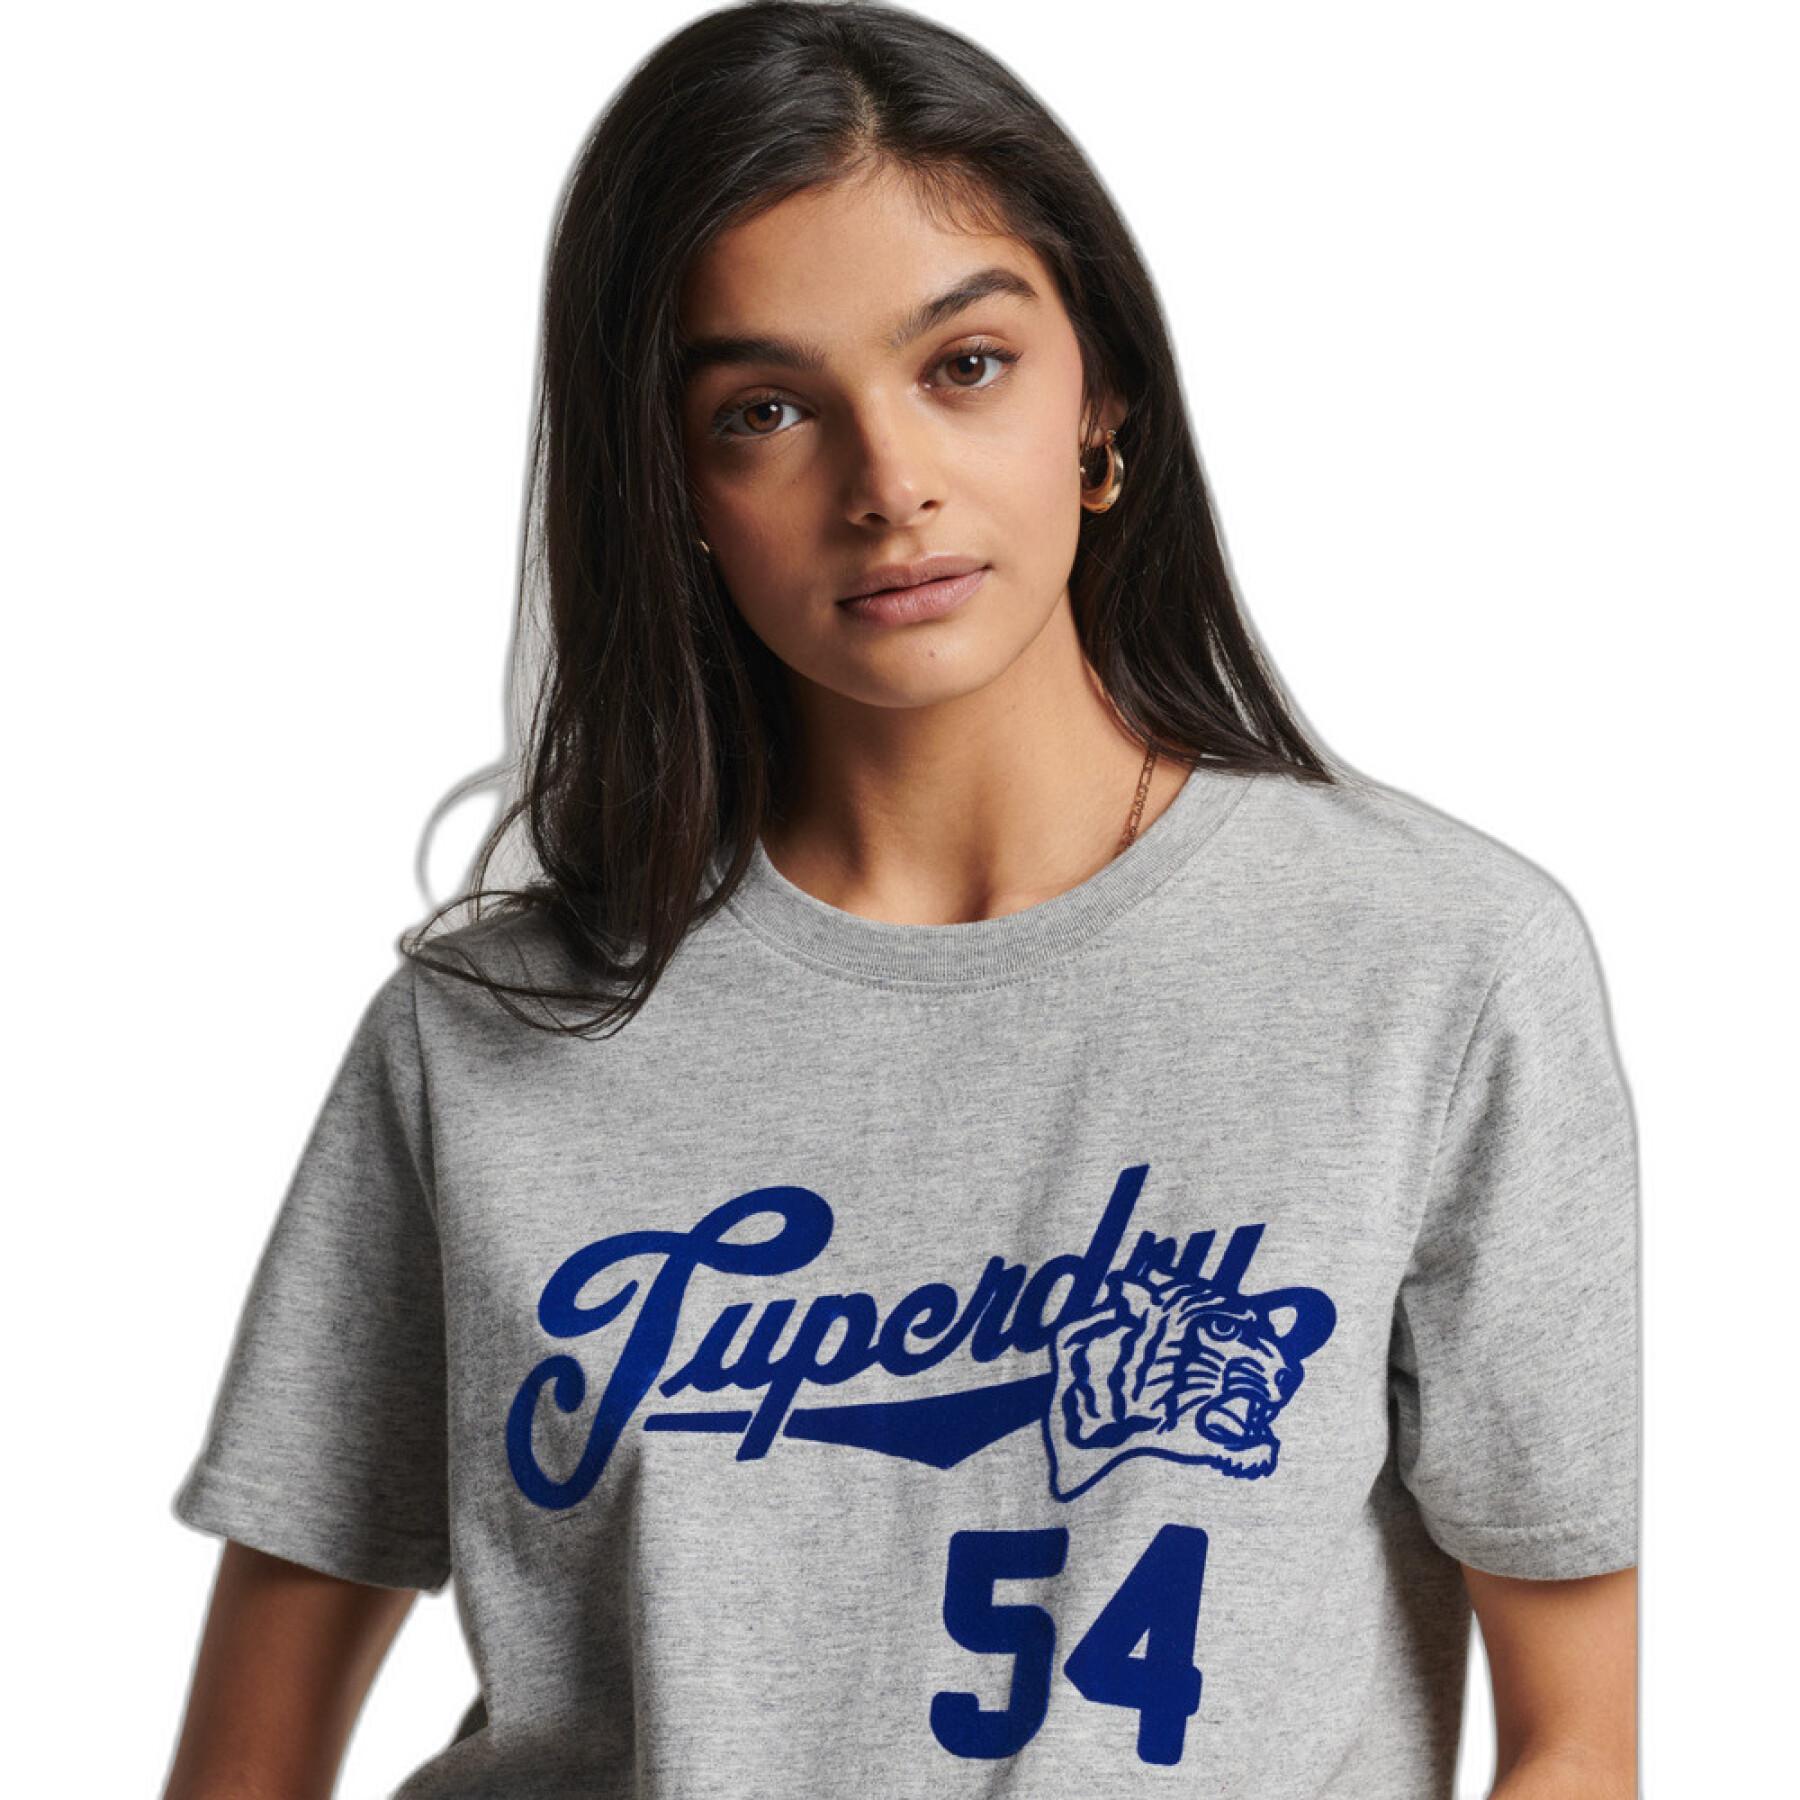 Camiseta de mujer Superdry Vintage Script Style College